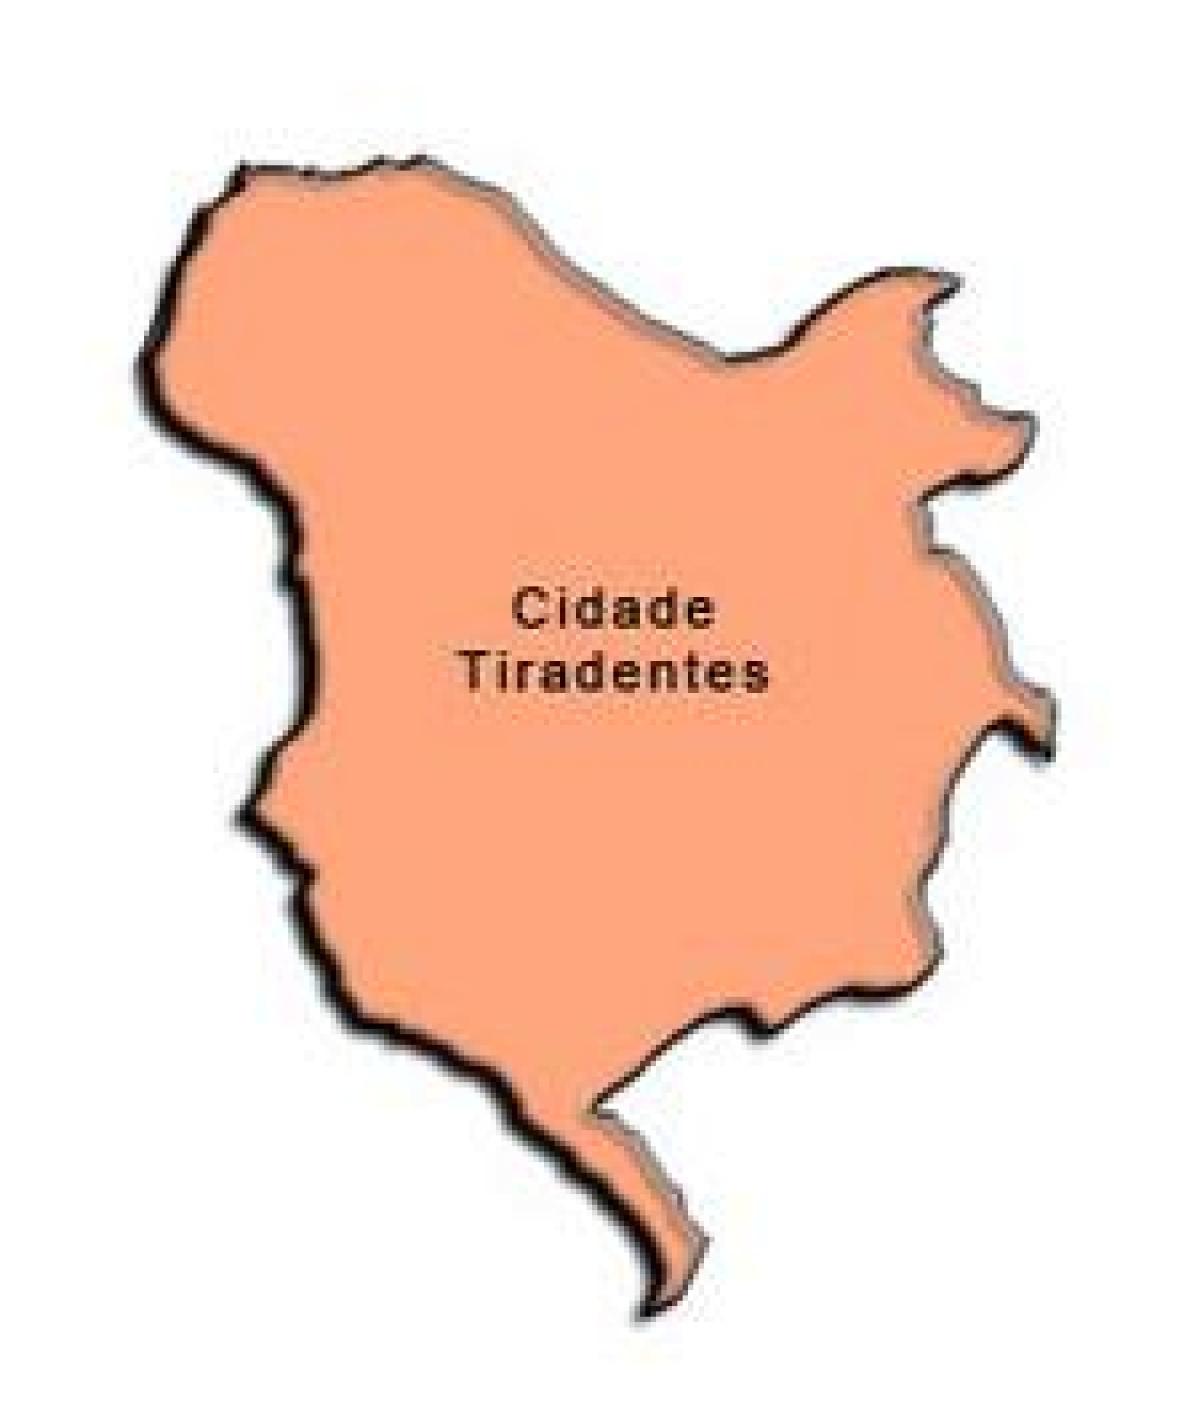 Mappa di Cidade Tiradentes, sub-prefettura